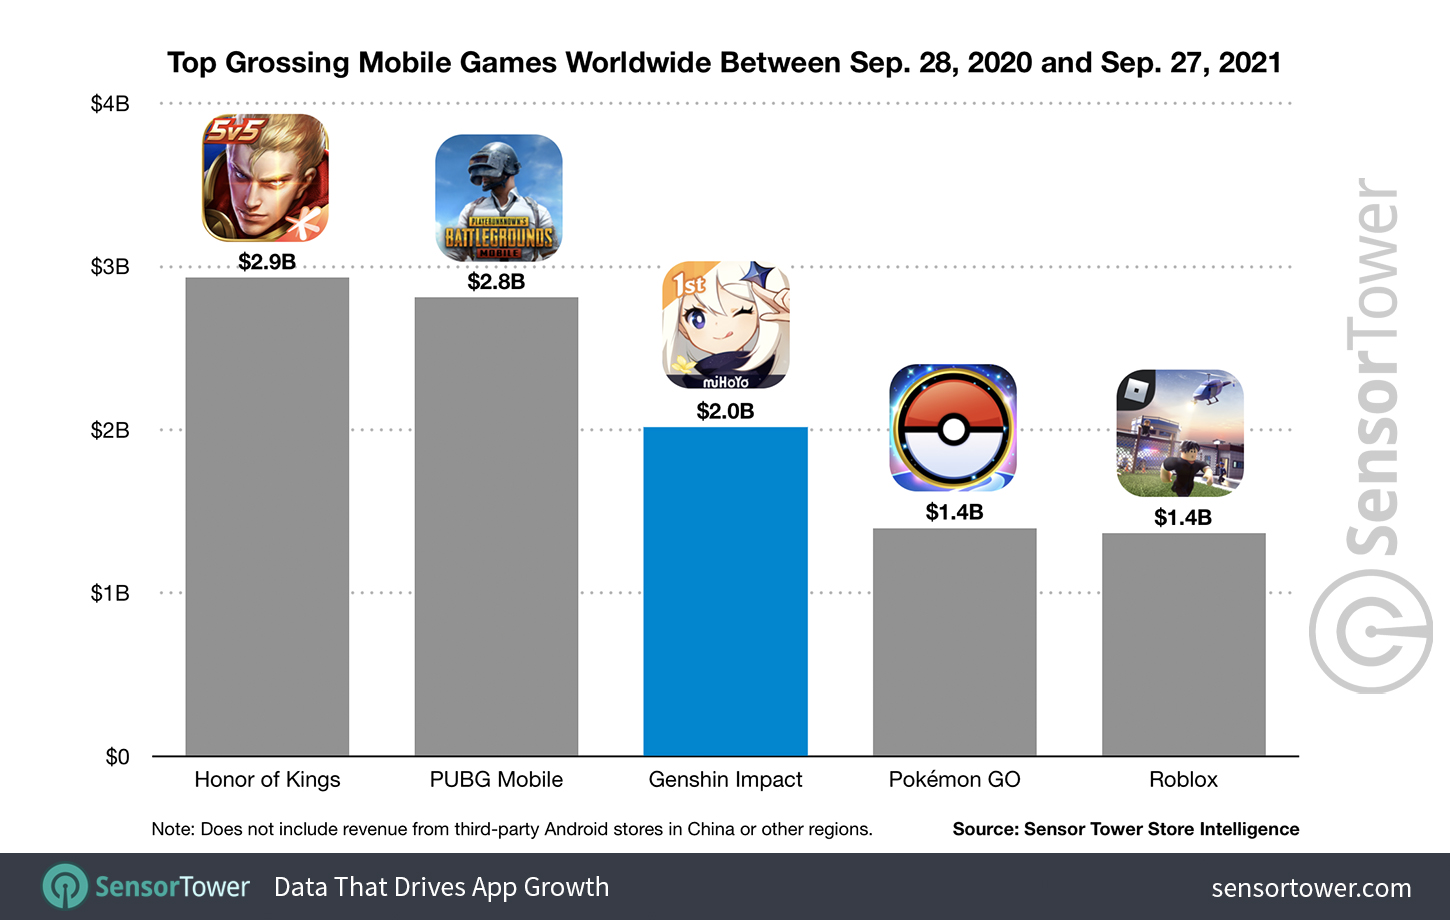 Top Grossing Mobile Games Worldwide Between September 28, 2020 and September 27, 2021